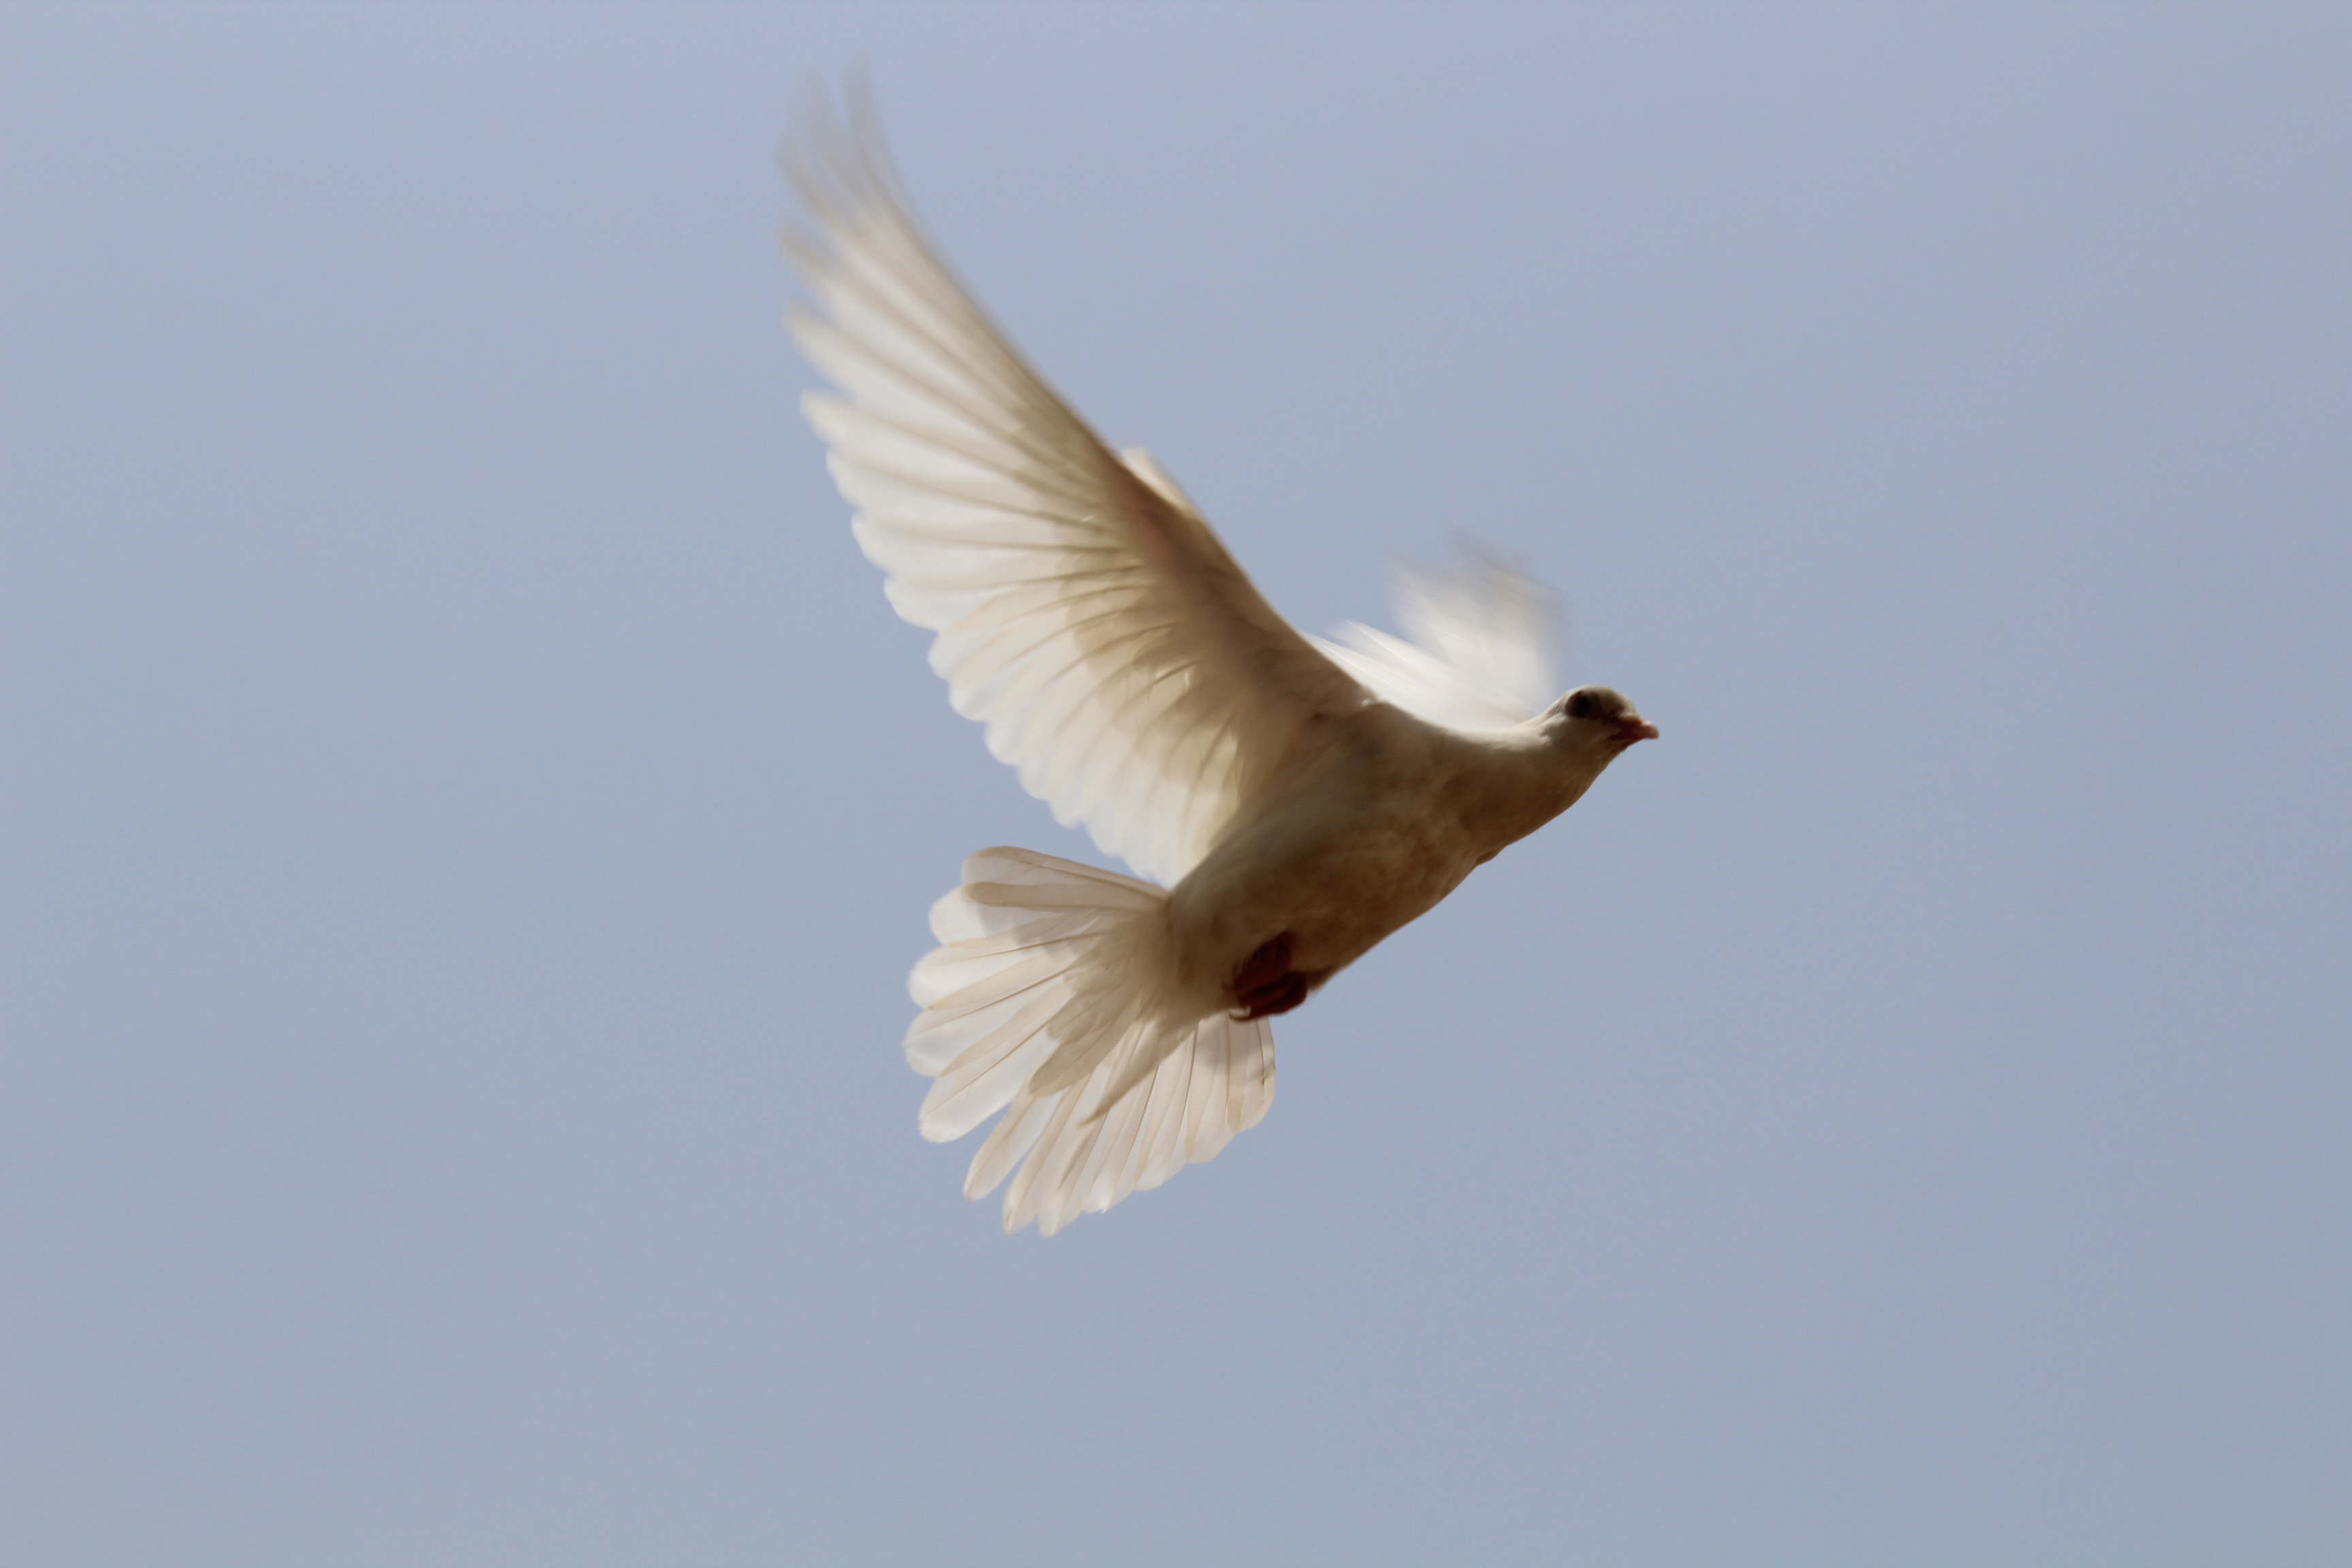 File:Flying Bird to his Peak.jpg - Wikimedia Commons